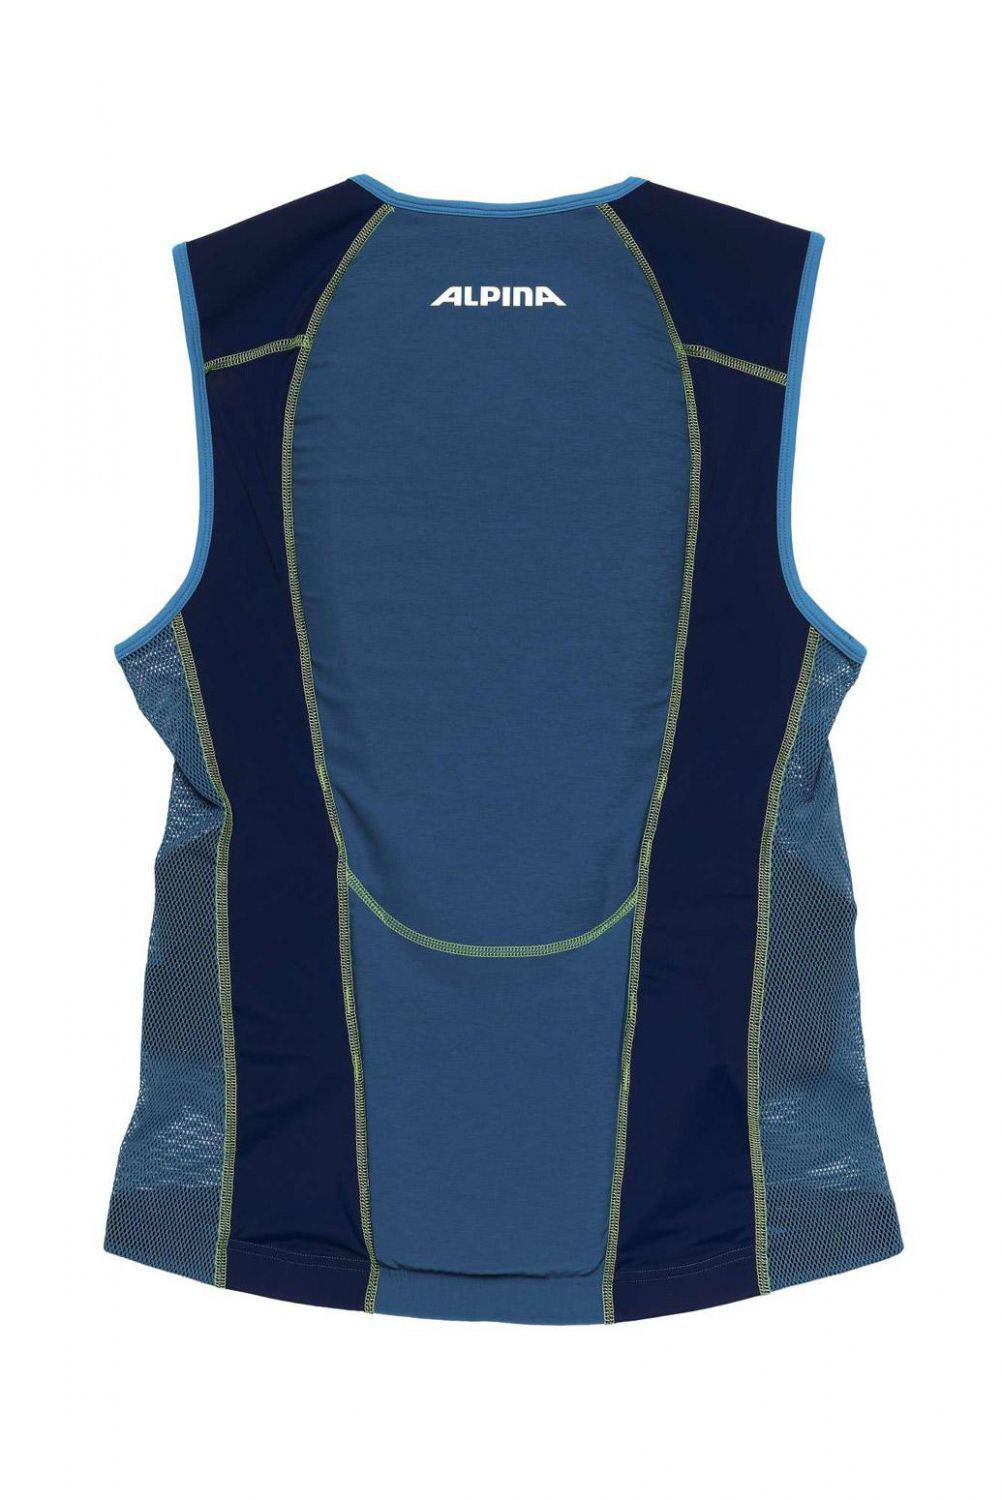 Alpina Jacket Soft Protector Men Vest (L = Körpergröße ca. 180-185 cm, 82 navy/green)